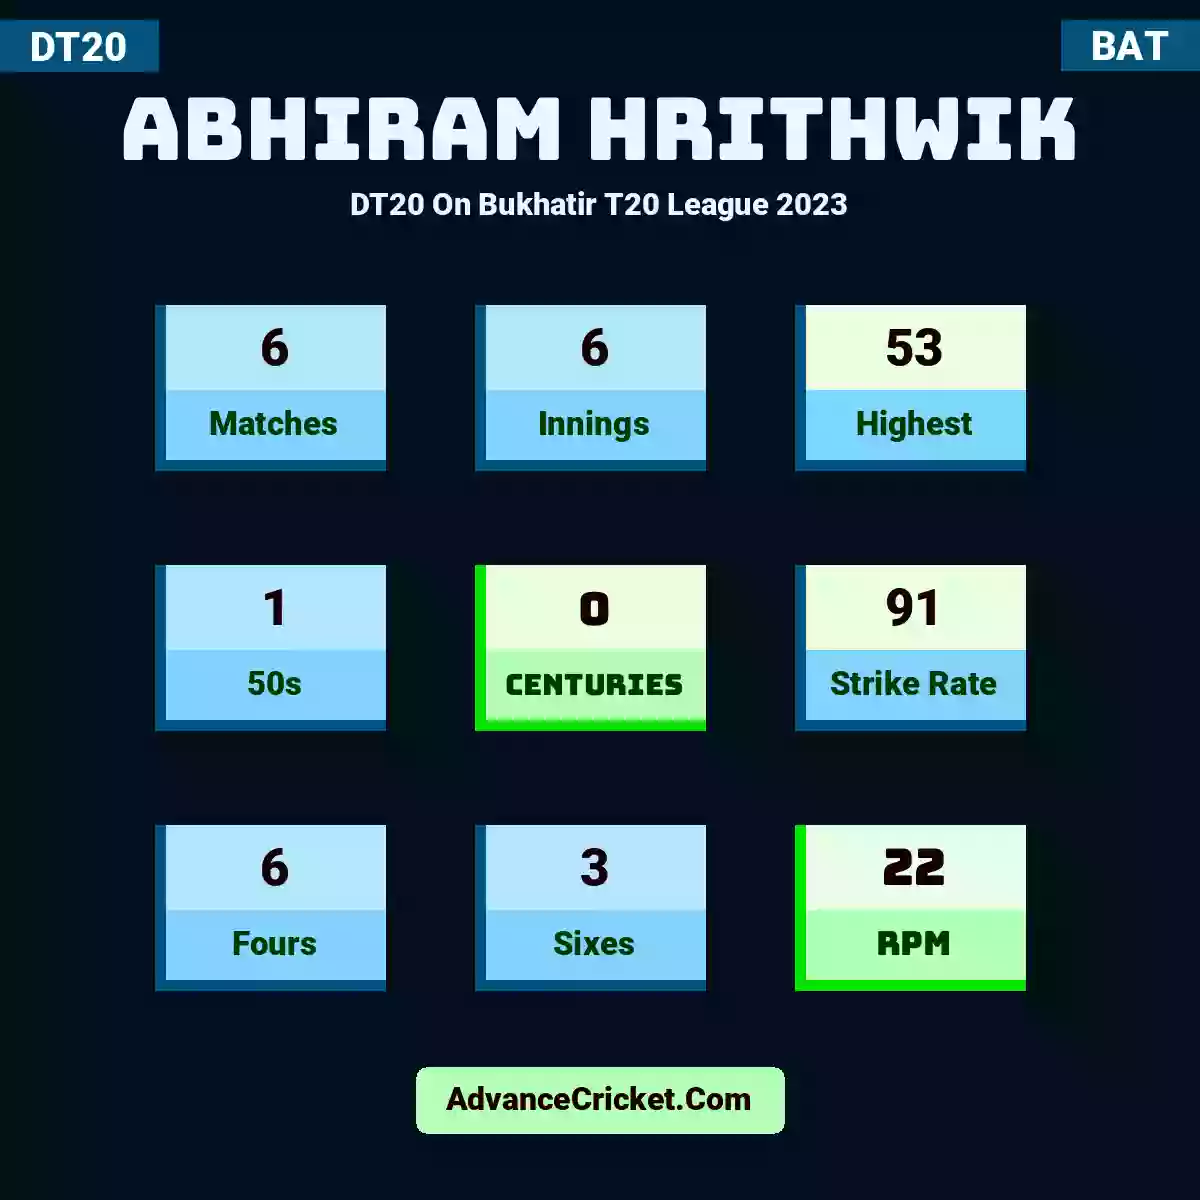 Abhiram Hrithwik DT20  On Bukhatir T20 League 2023, Abhiram Hrithwik played 6 matches, scored 53 runs as highest, 1 half-centuries, and 0 centuries, with a strike rate of 91. A.Hrithwik hit 6 fours and 3 sixes, with an RPM of 22.